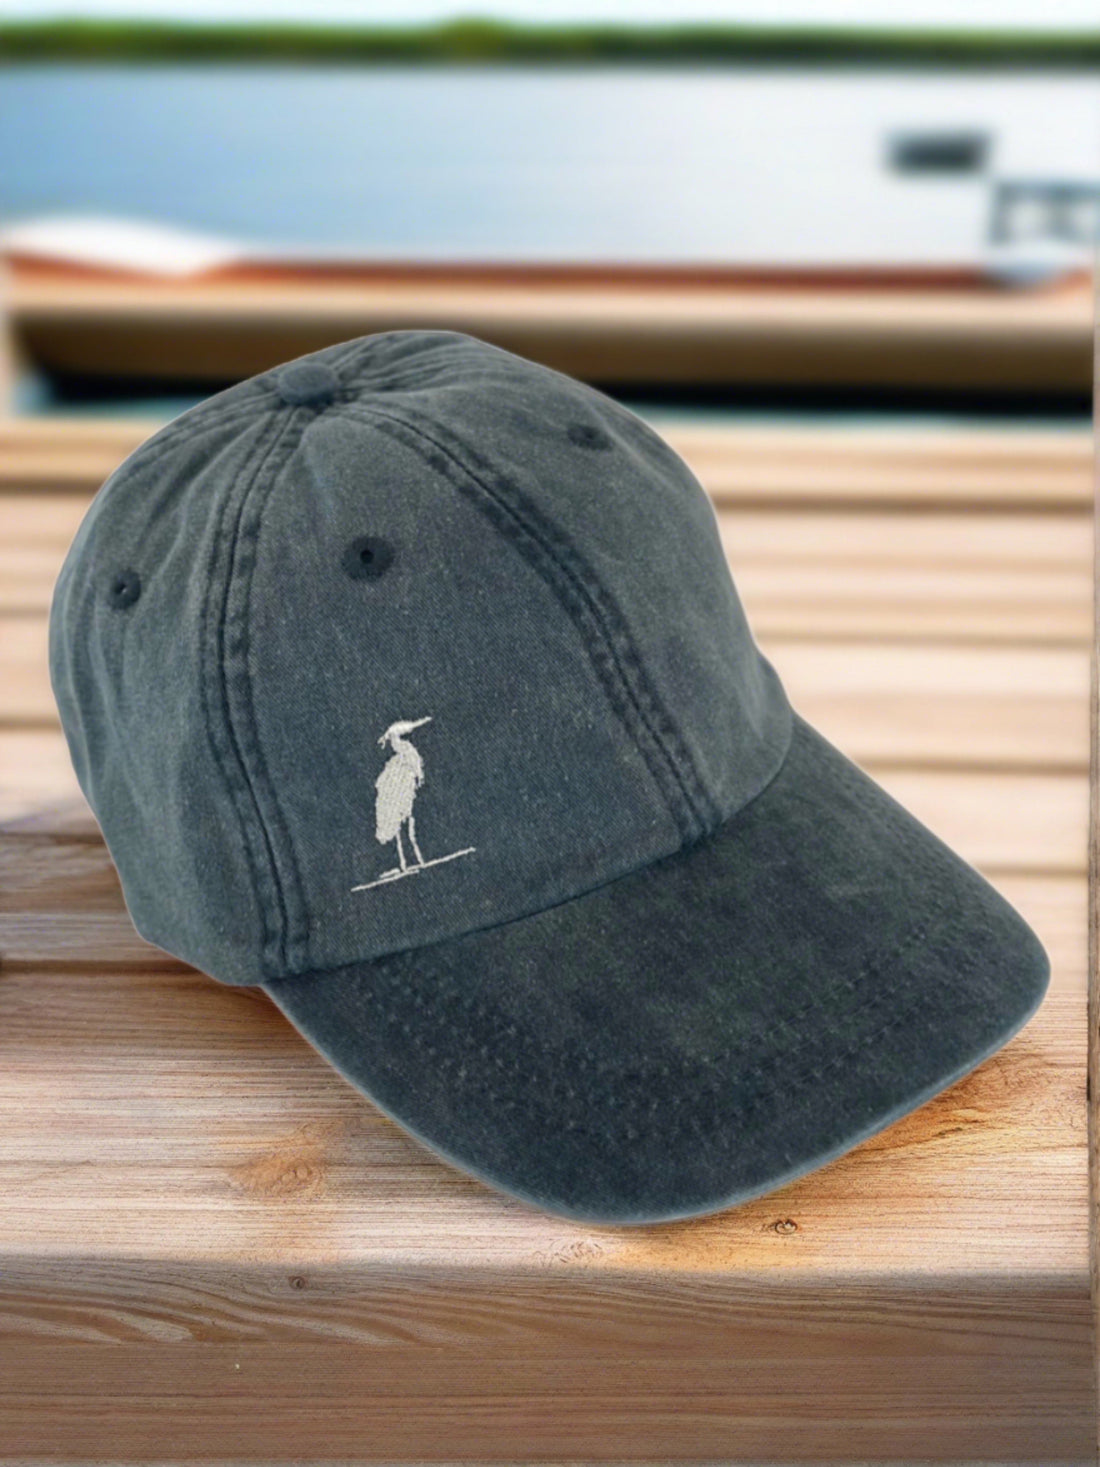 eastern shore brand, eastern shore hat, baseball cap, dad hat, navy blue hat, white hat, blue hat, embroidered hat, embroidered heron, heron hat